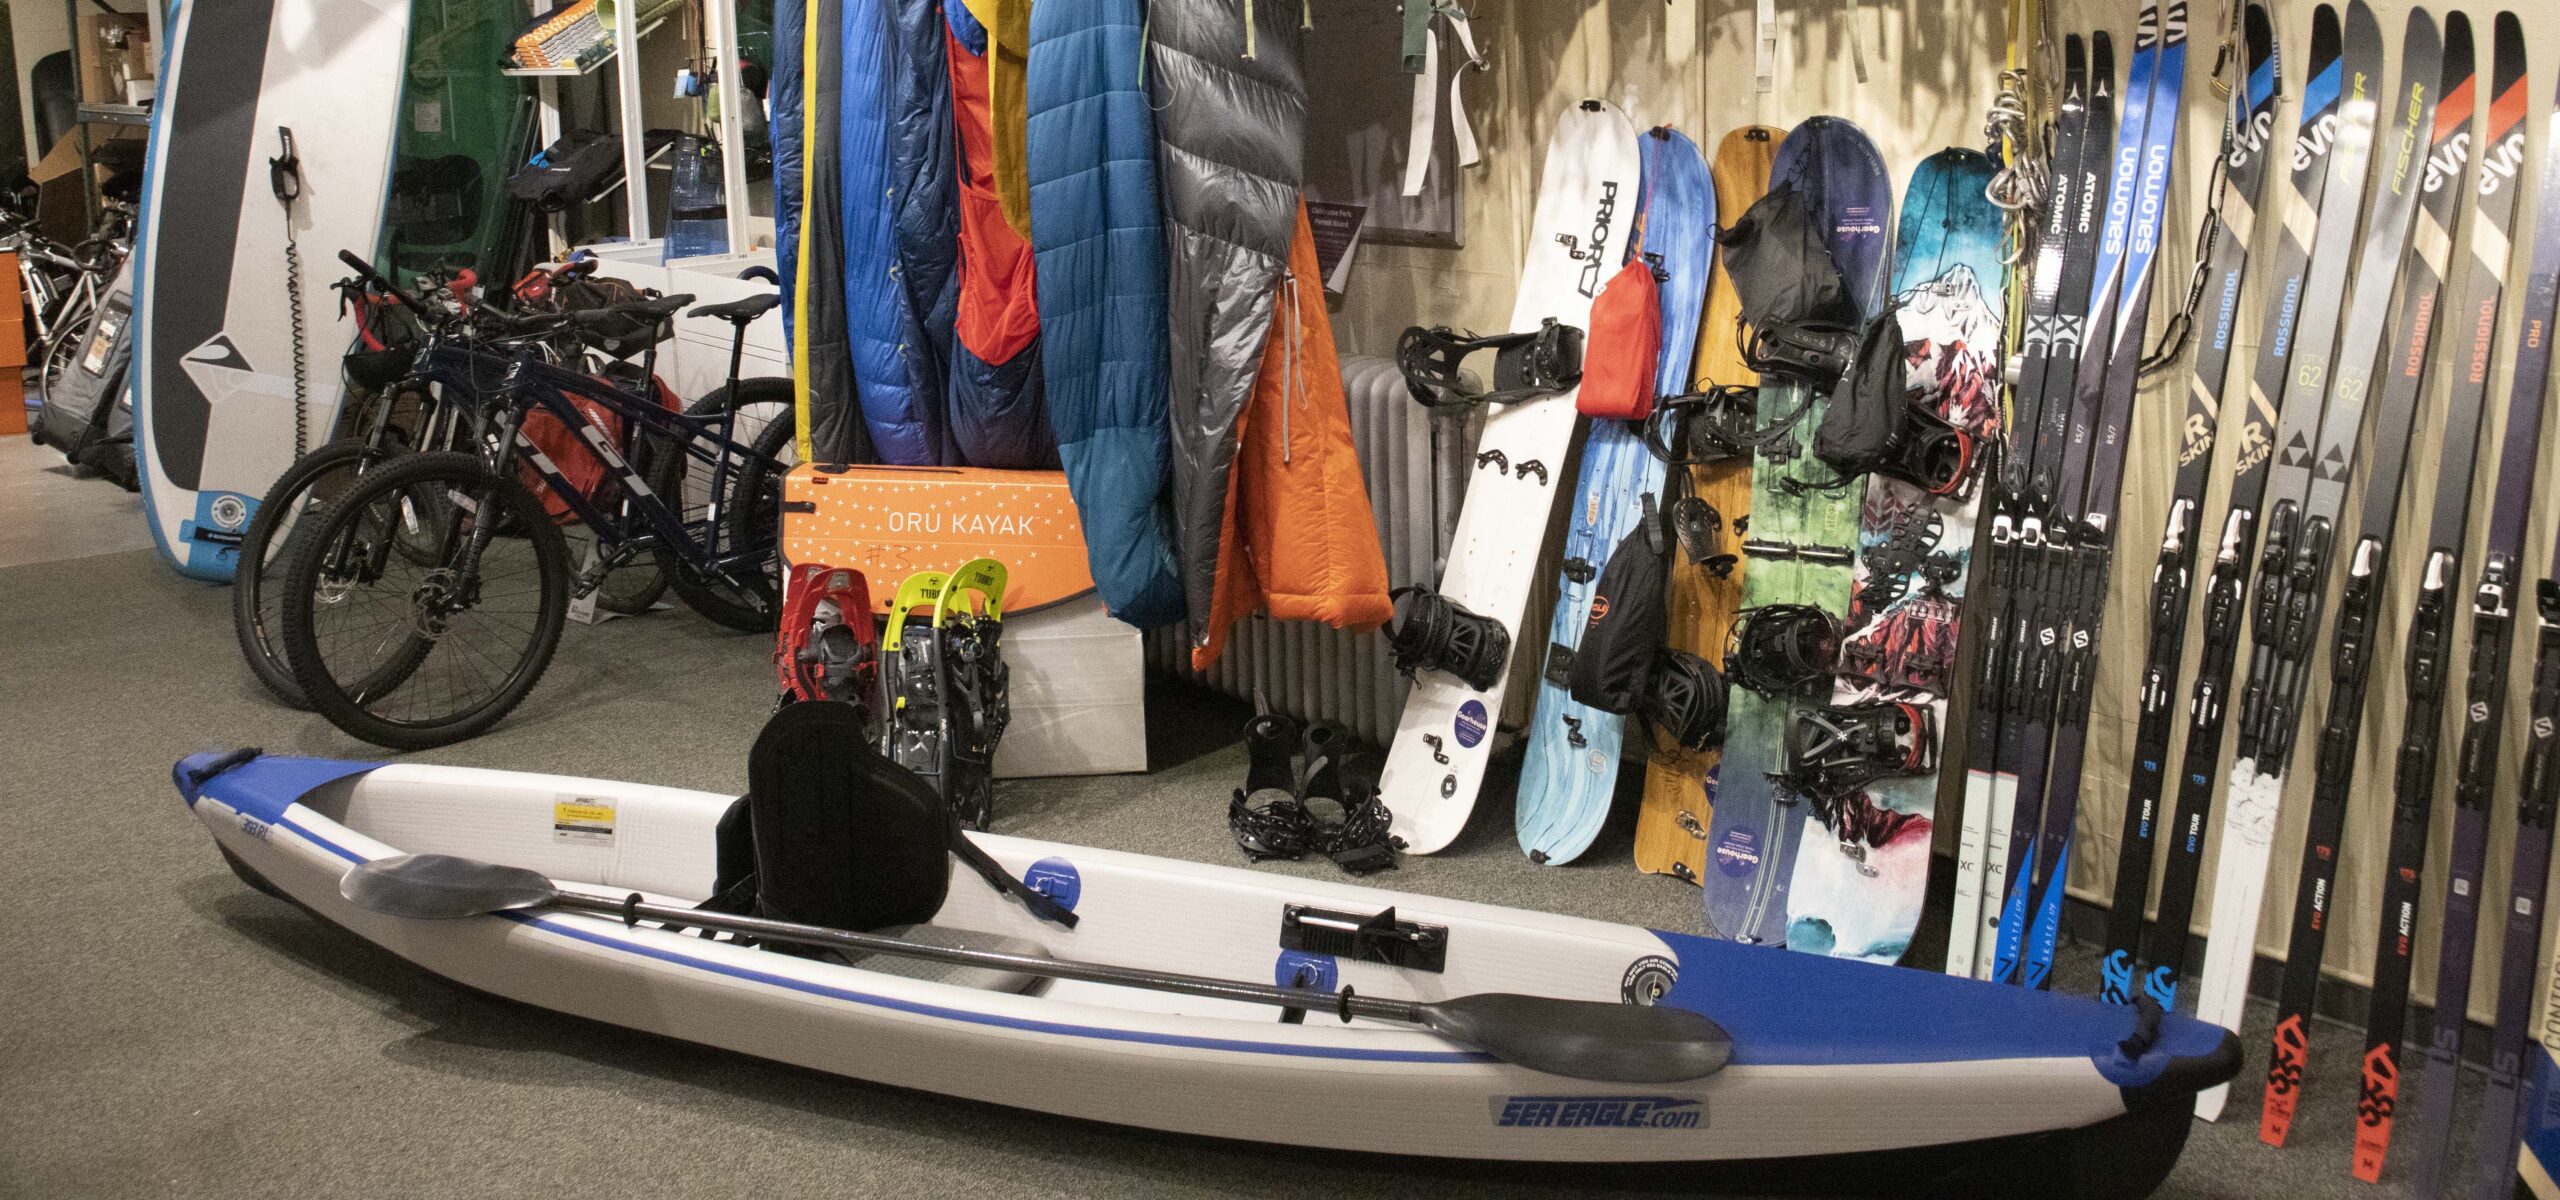 Wall arranged full of outdoor adventure gear like skis, sleeping bags, kayaks, etc.